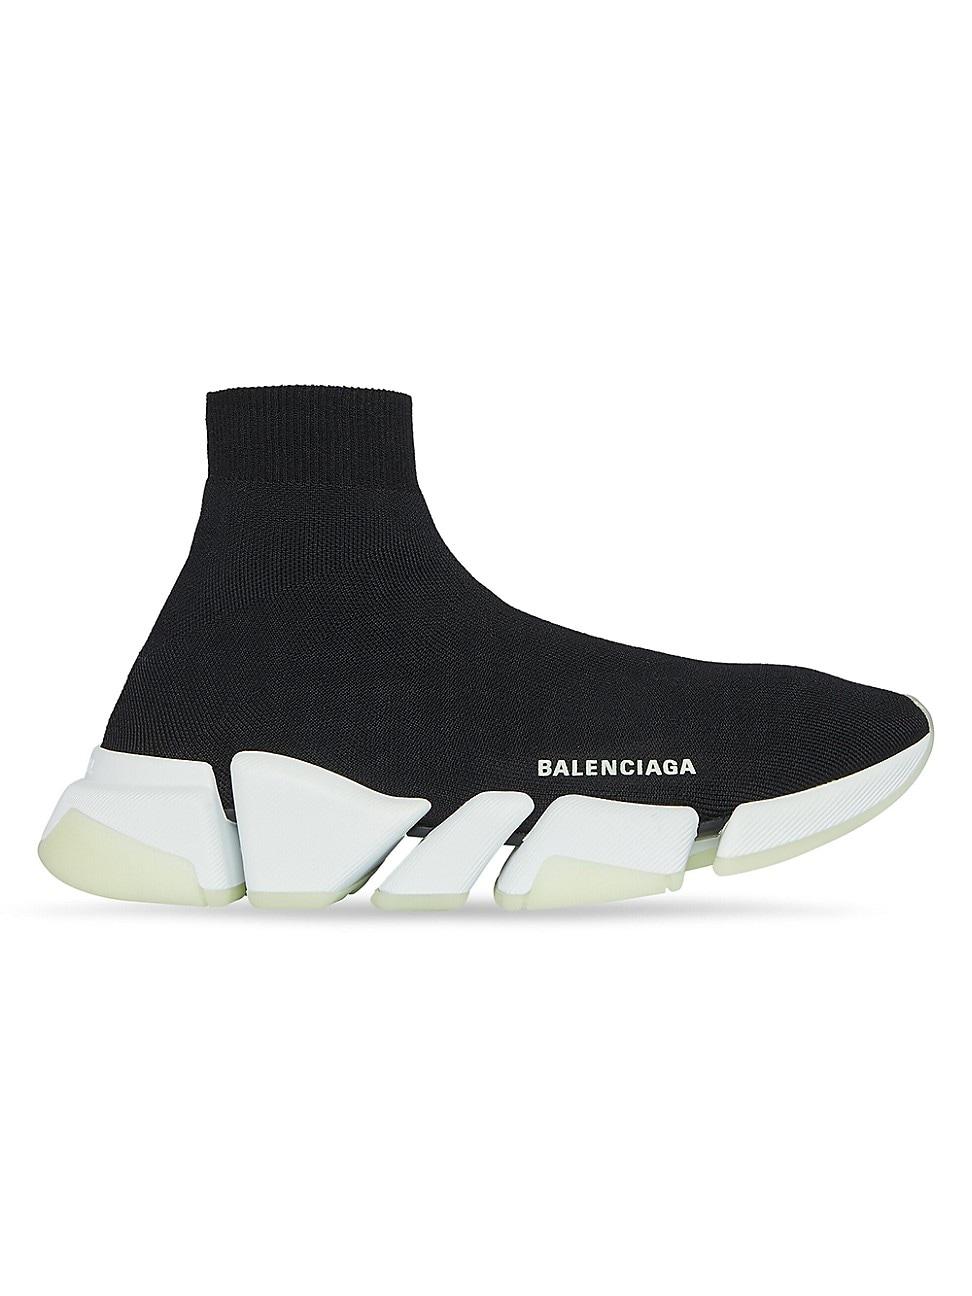 Balenciaga Speed 2.0 Recycled Knit Sneaker Glow In The Dark in Black | Lyst